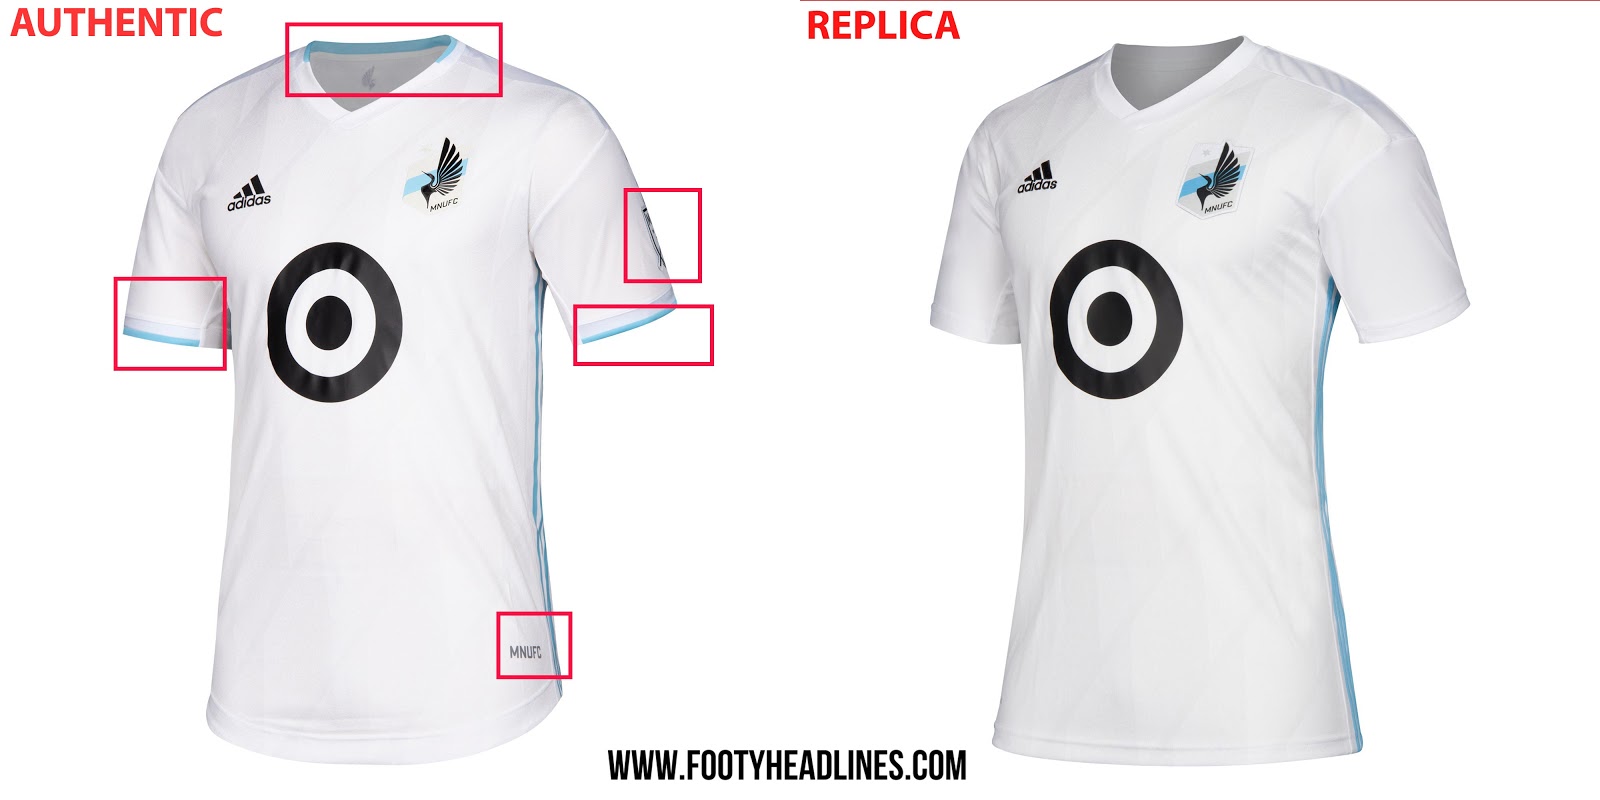 replica soccer shirts